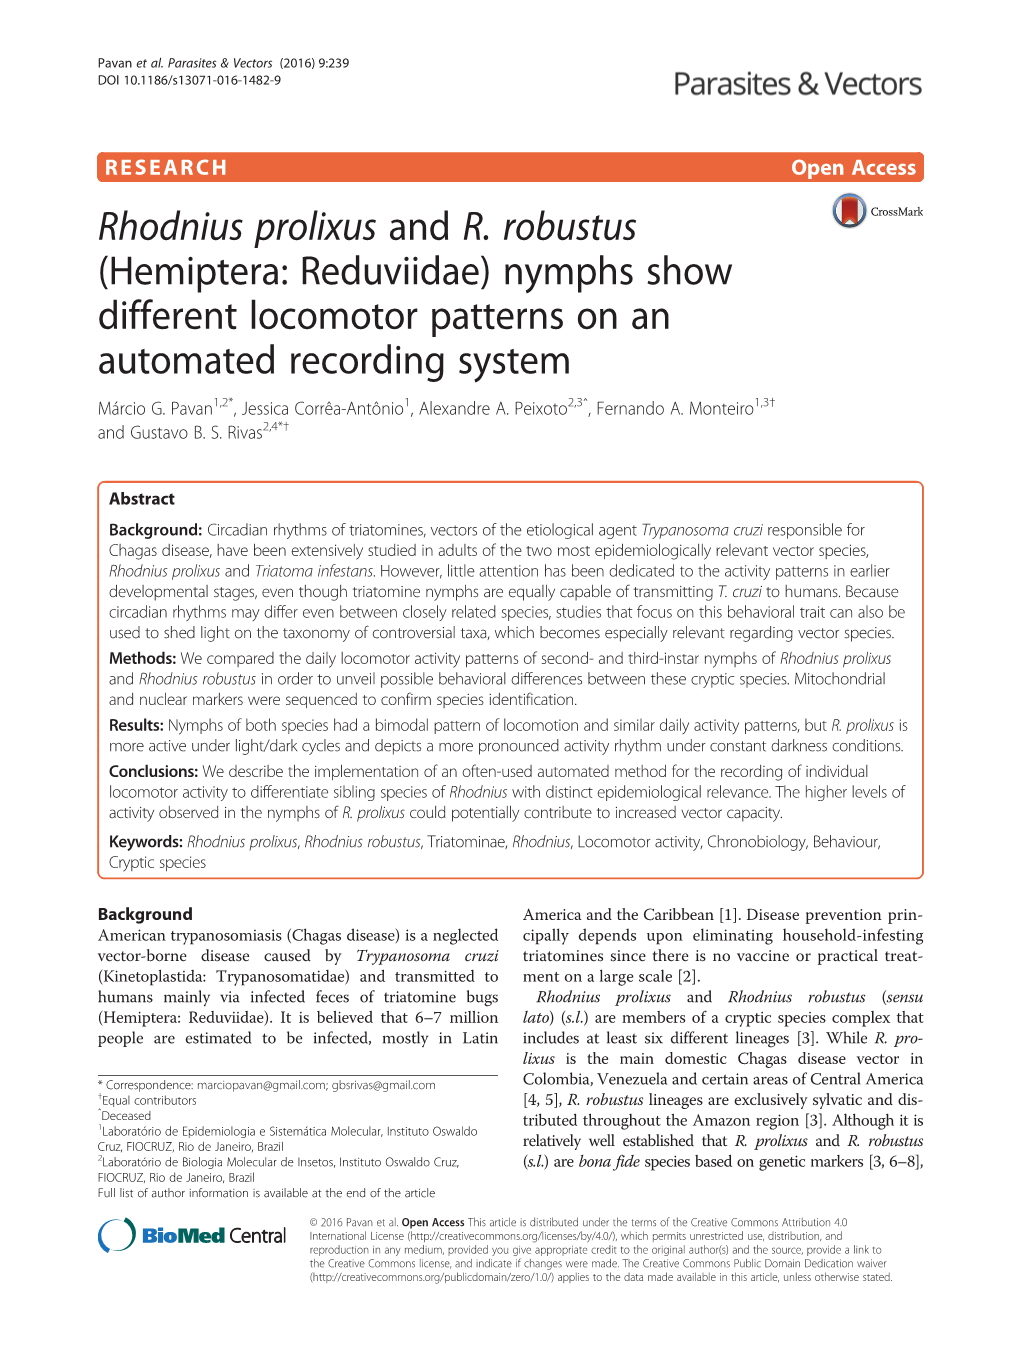 Rhodnius Prolixus and R. Robustus (Hemiptera: Reduviidae) Nymphs Show Different Locomotor Patterns on an Automated Recording System Márcio G